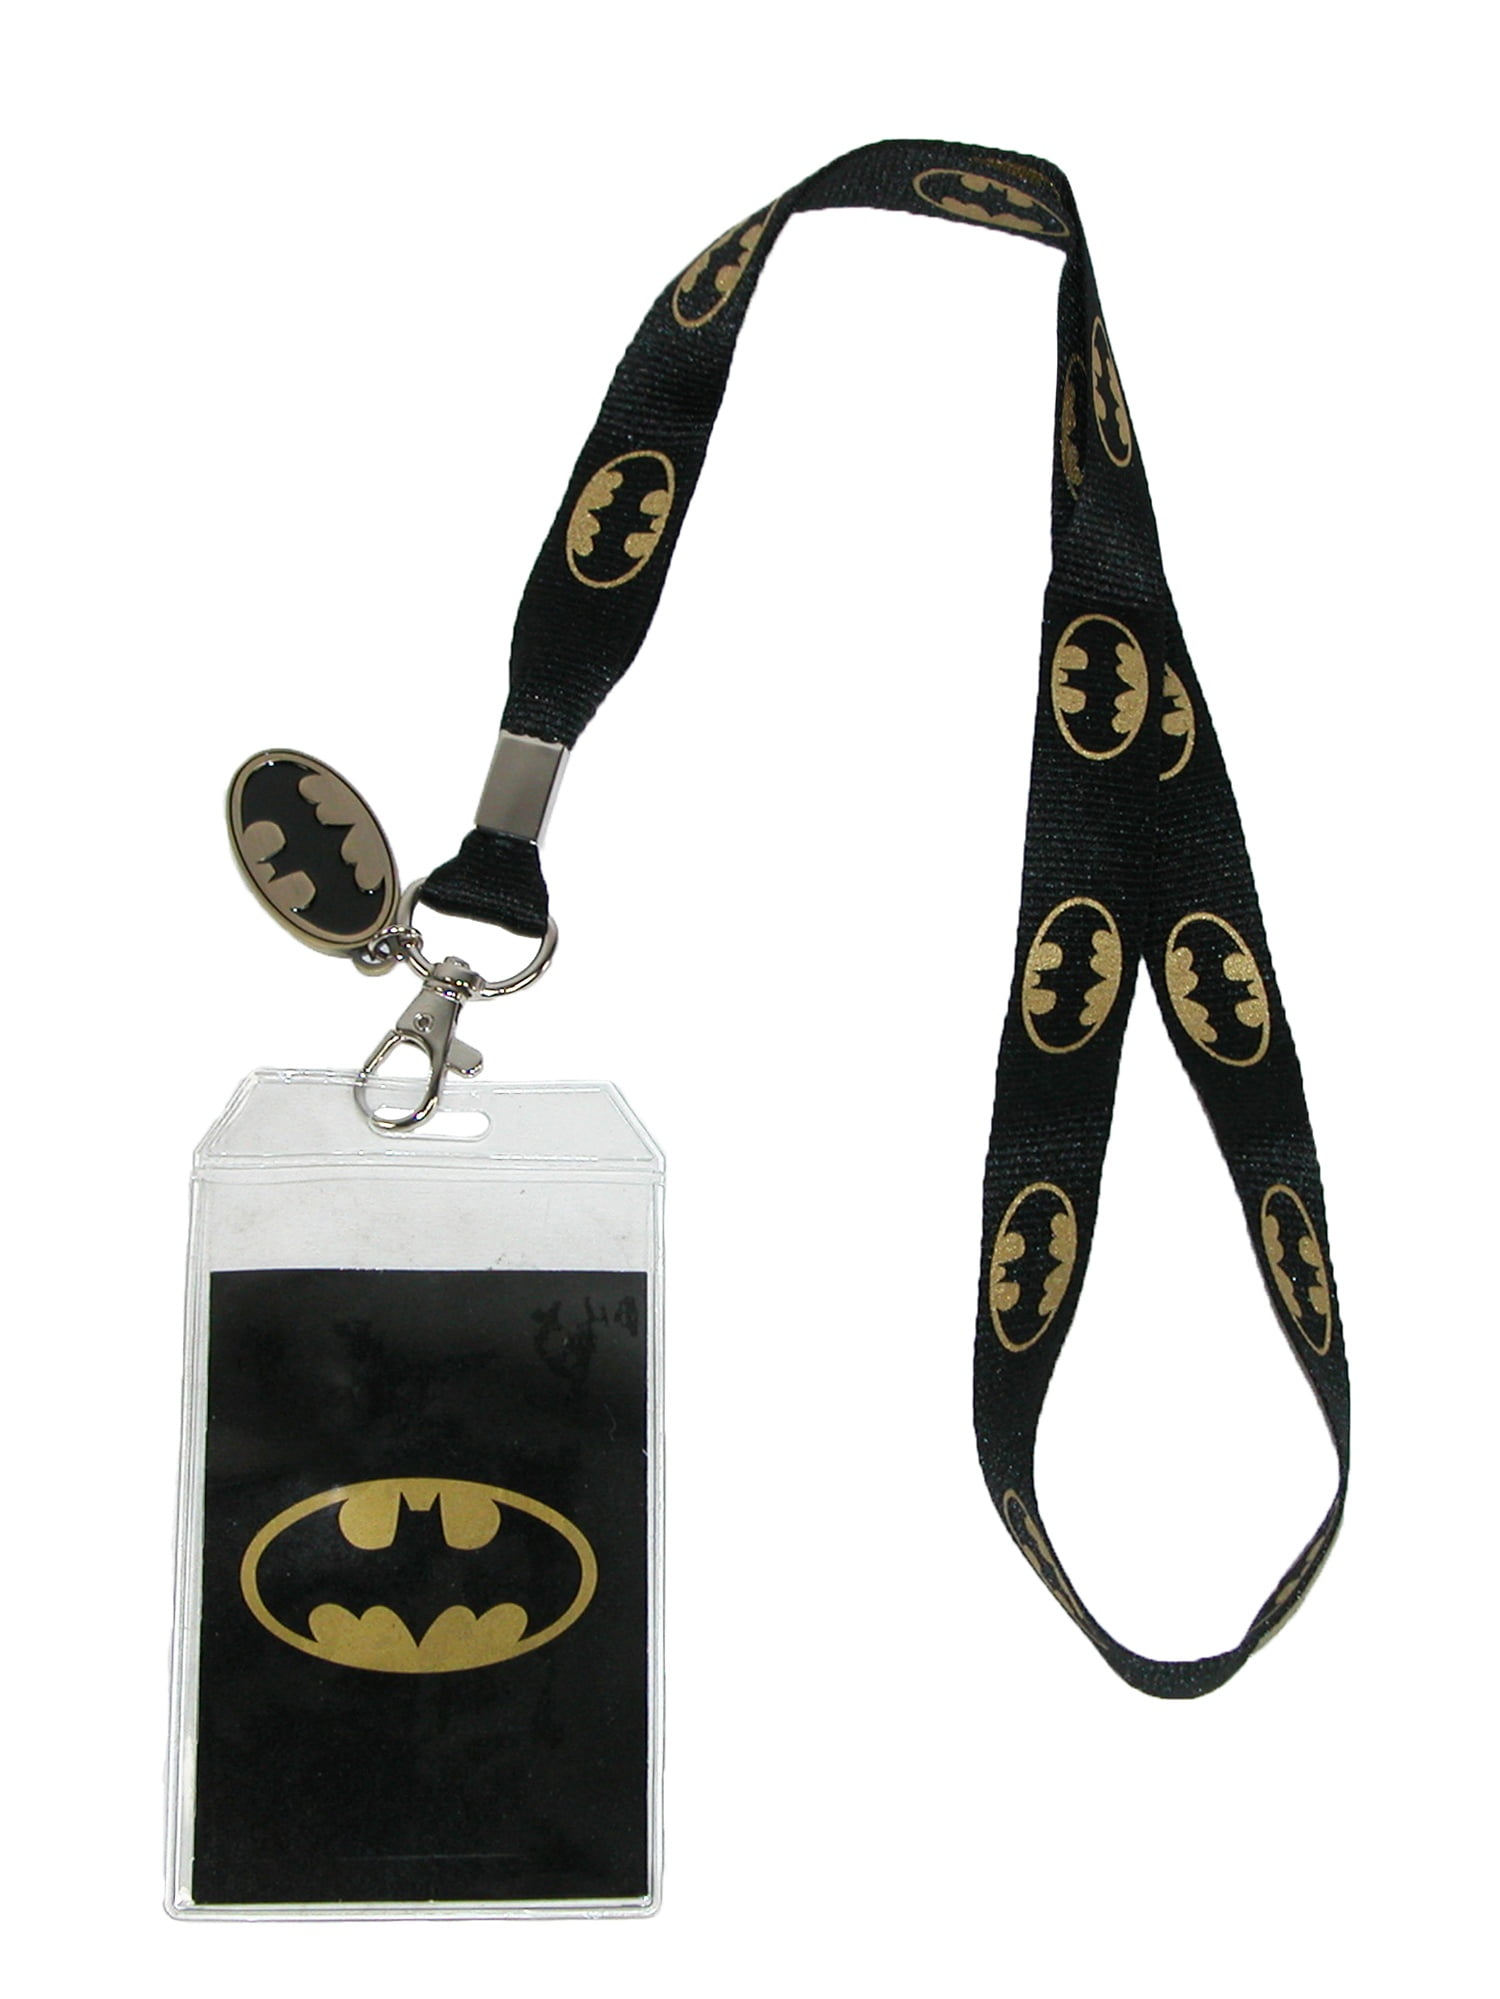 Batman Lanyard with ID Badge Holder and Metal Charm 